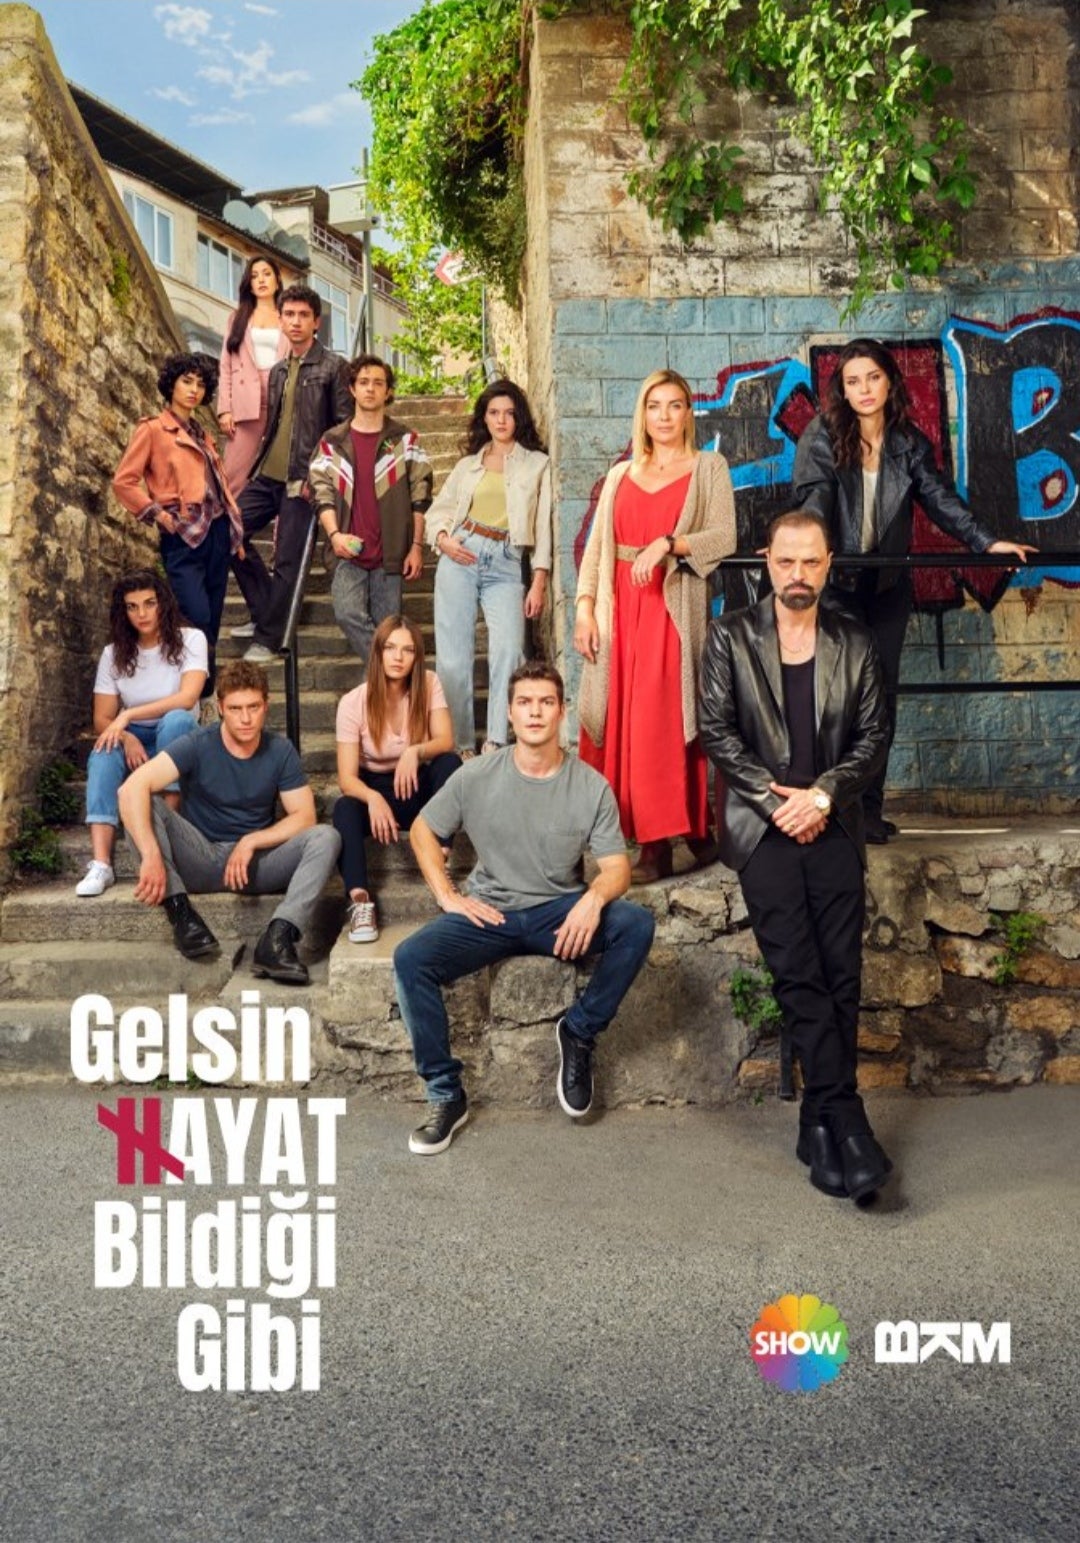 TV ratings for Gelsin Hayat Bildigi Gibi in Germany. Show TV TV series